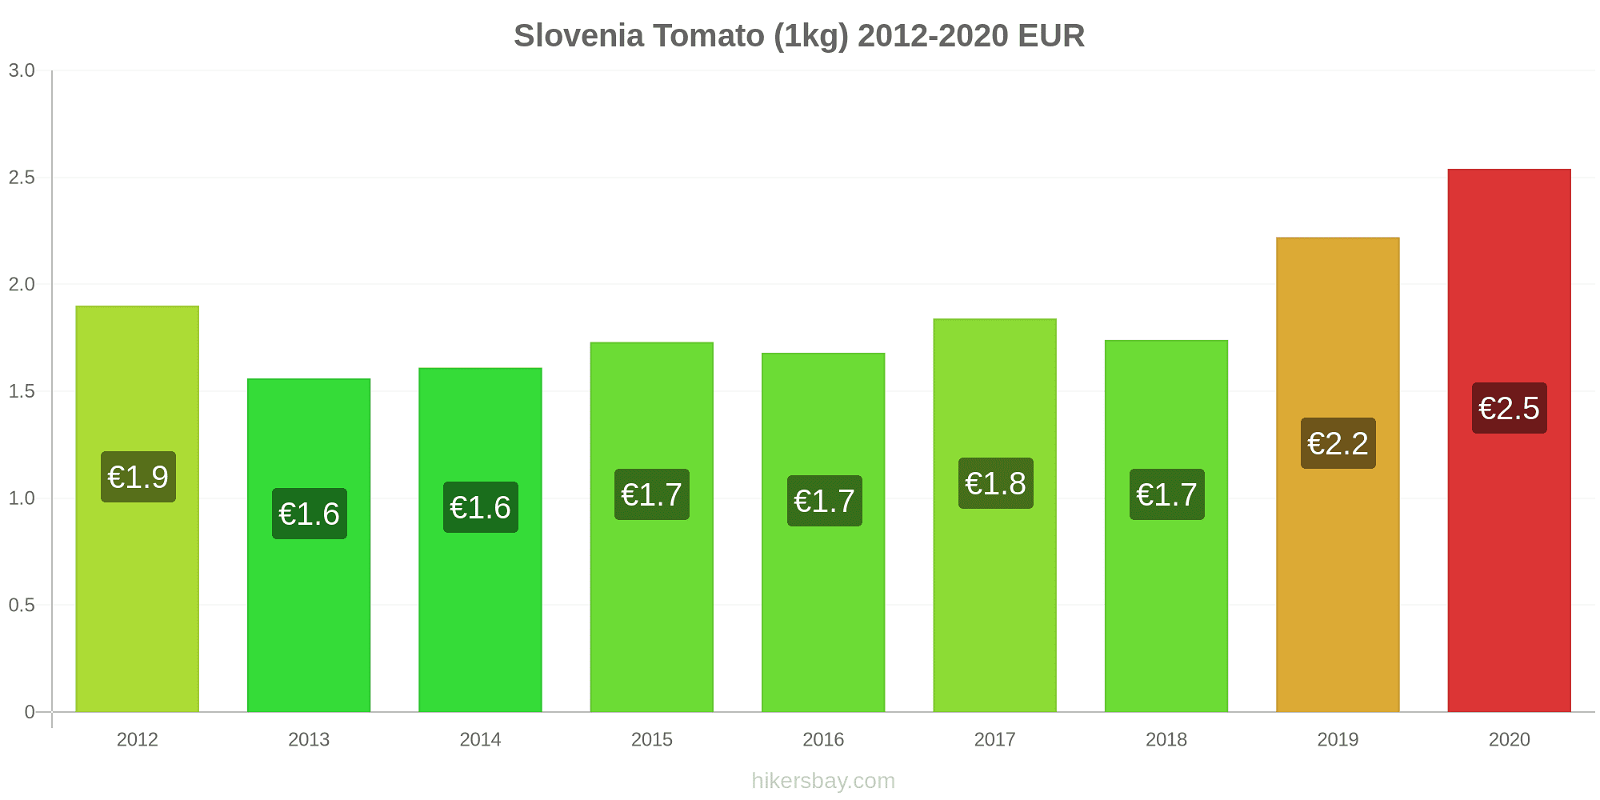 Slovenia price changes Tomato (1kg) hikersbay.com